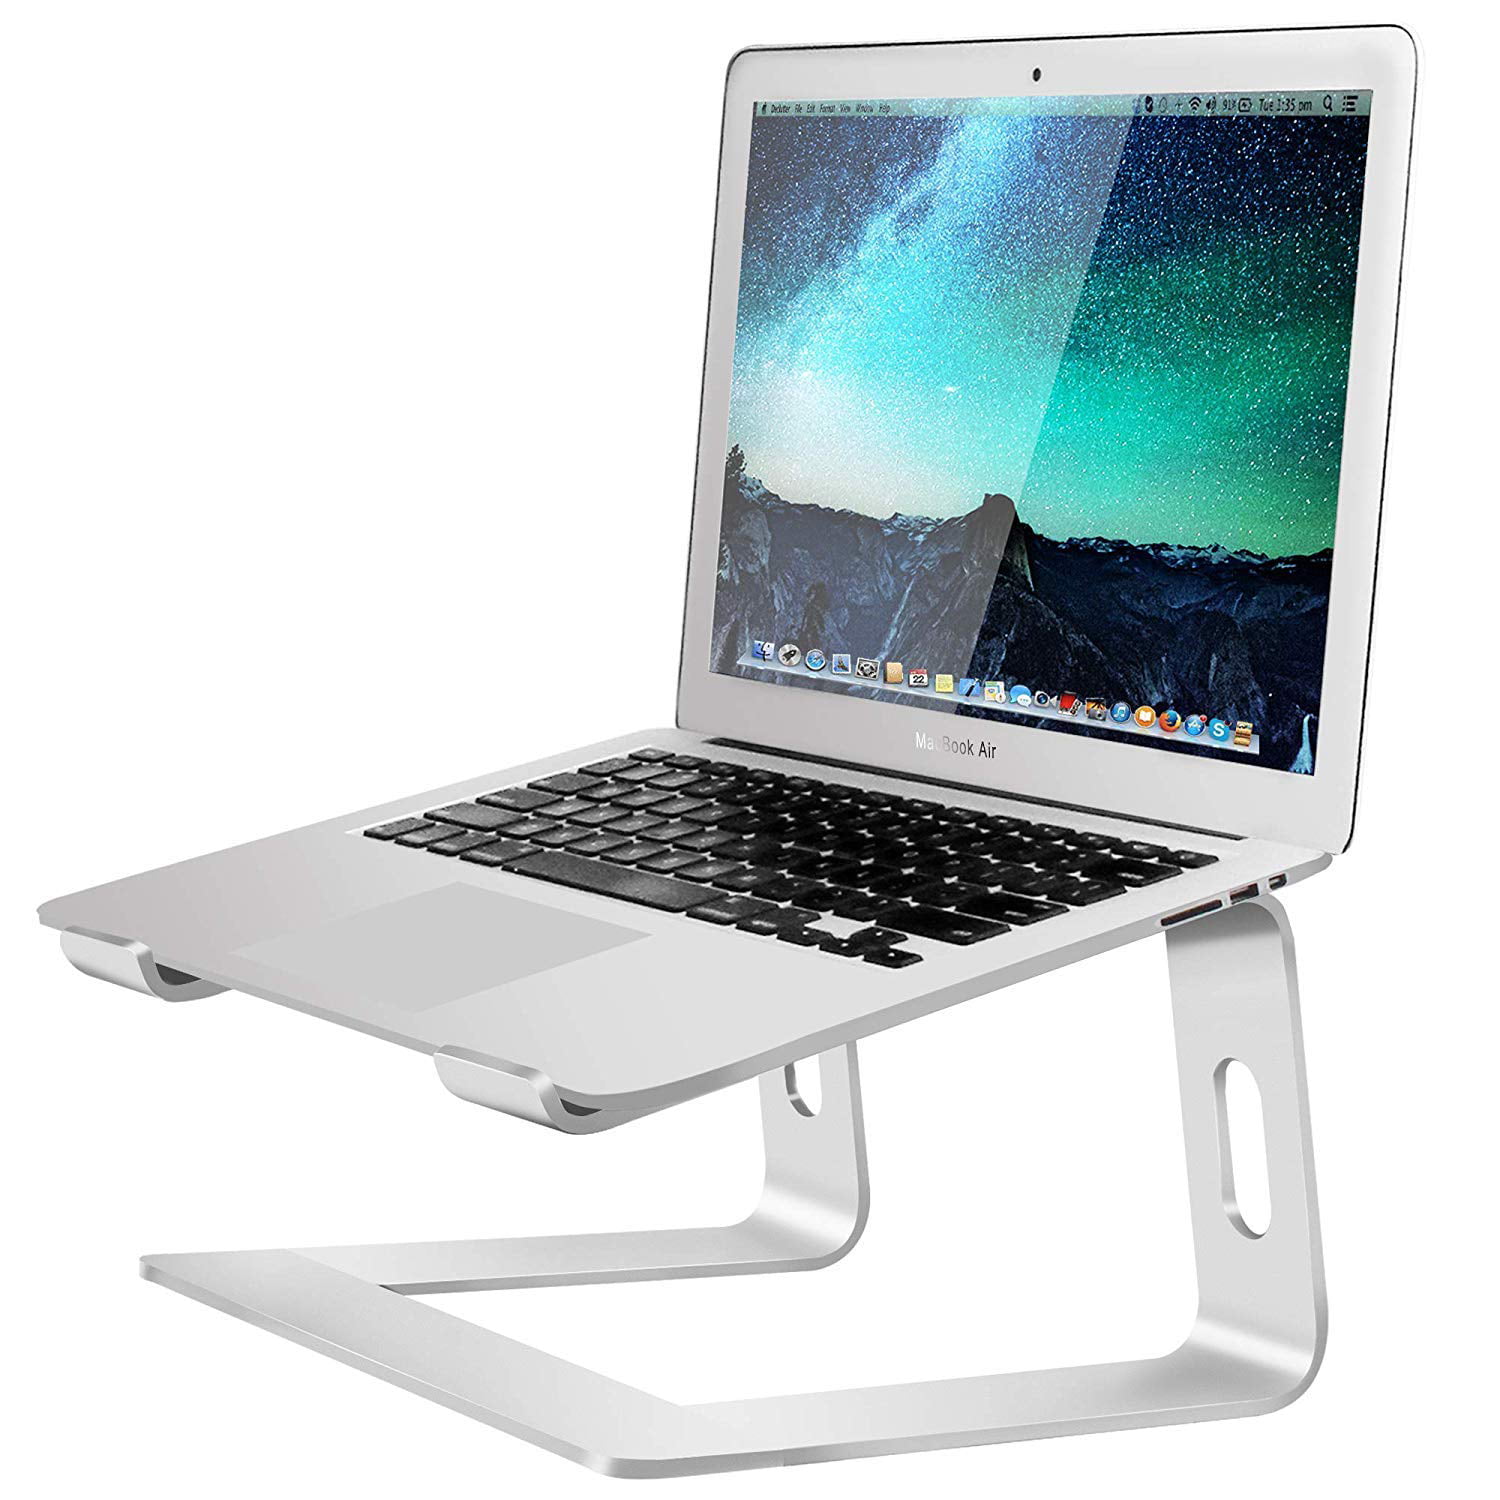 Portable Adjustable Ergonomic Riser Lift Cooling Notebook Aluminum Desktop Universal Laptop Stand PC Compatible Desk Holder Folding Stand 